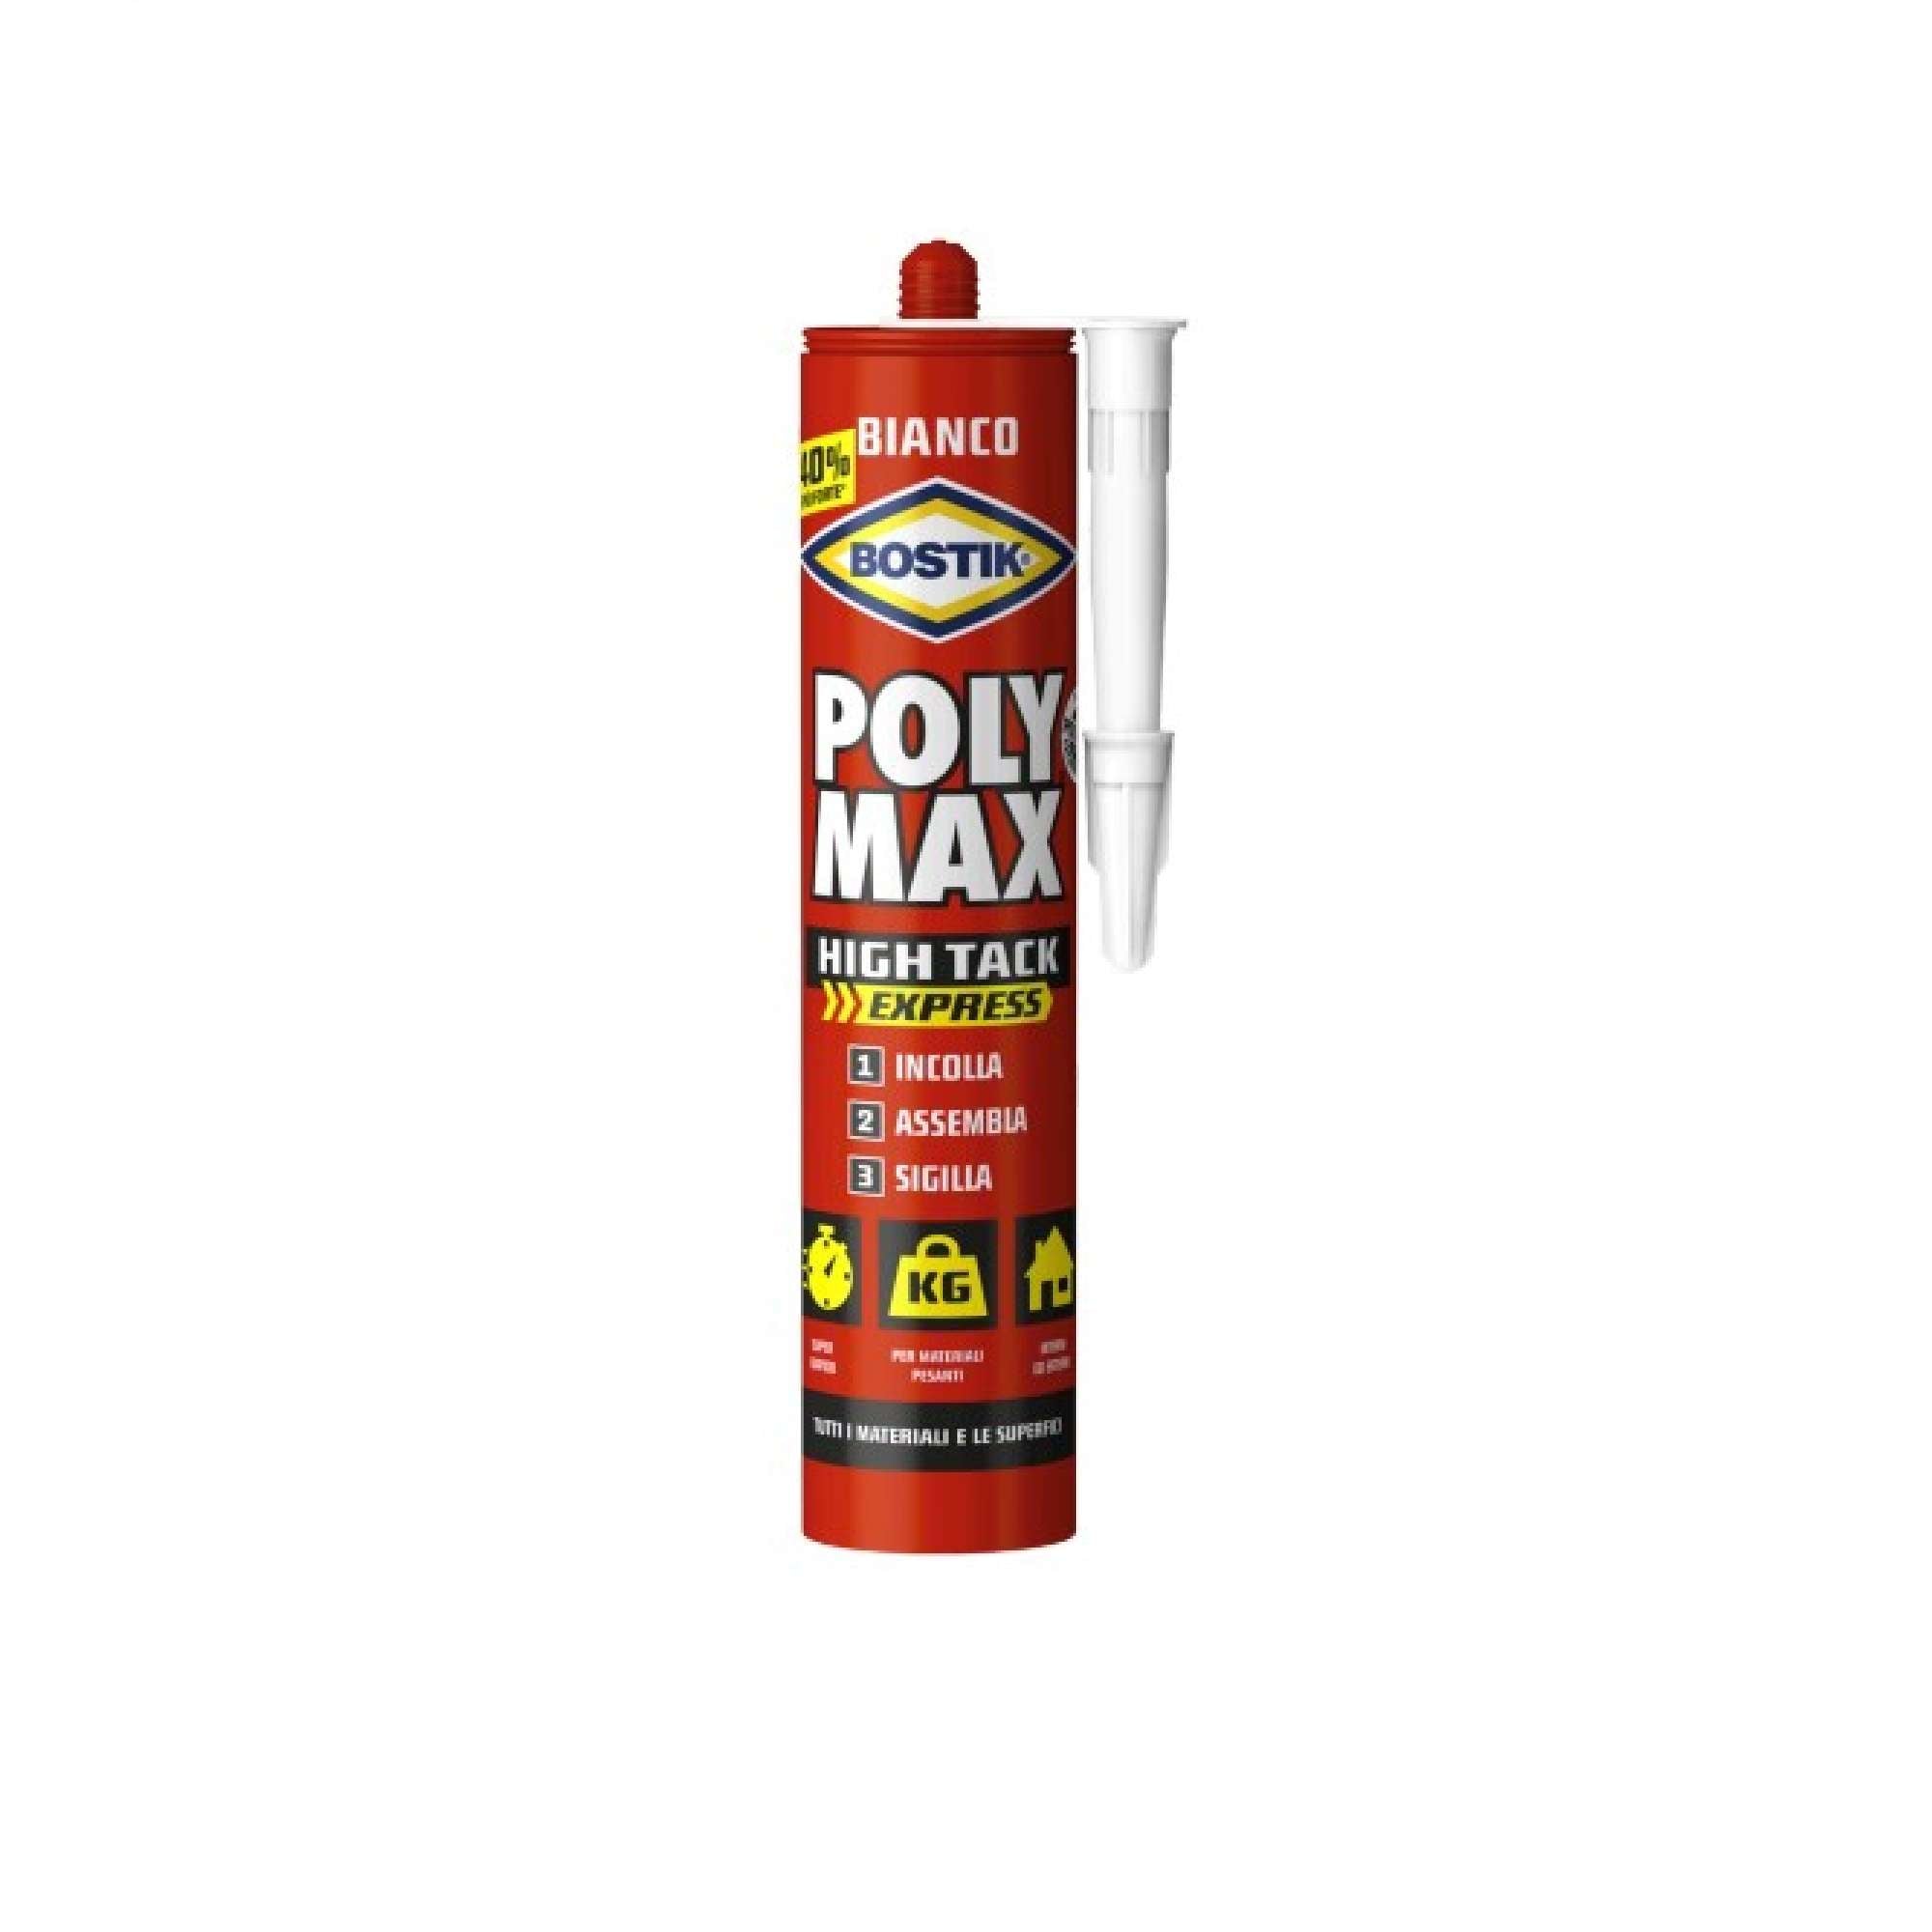 Polymax Hte Bianc Adhesive Sealant - UHU Bostik 6316017